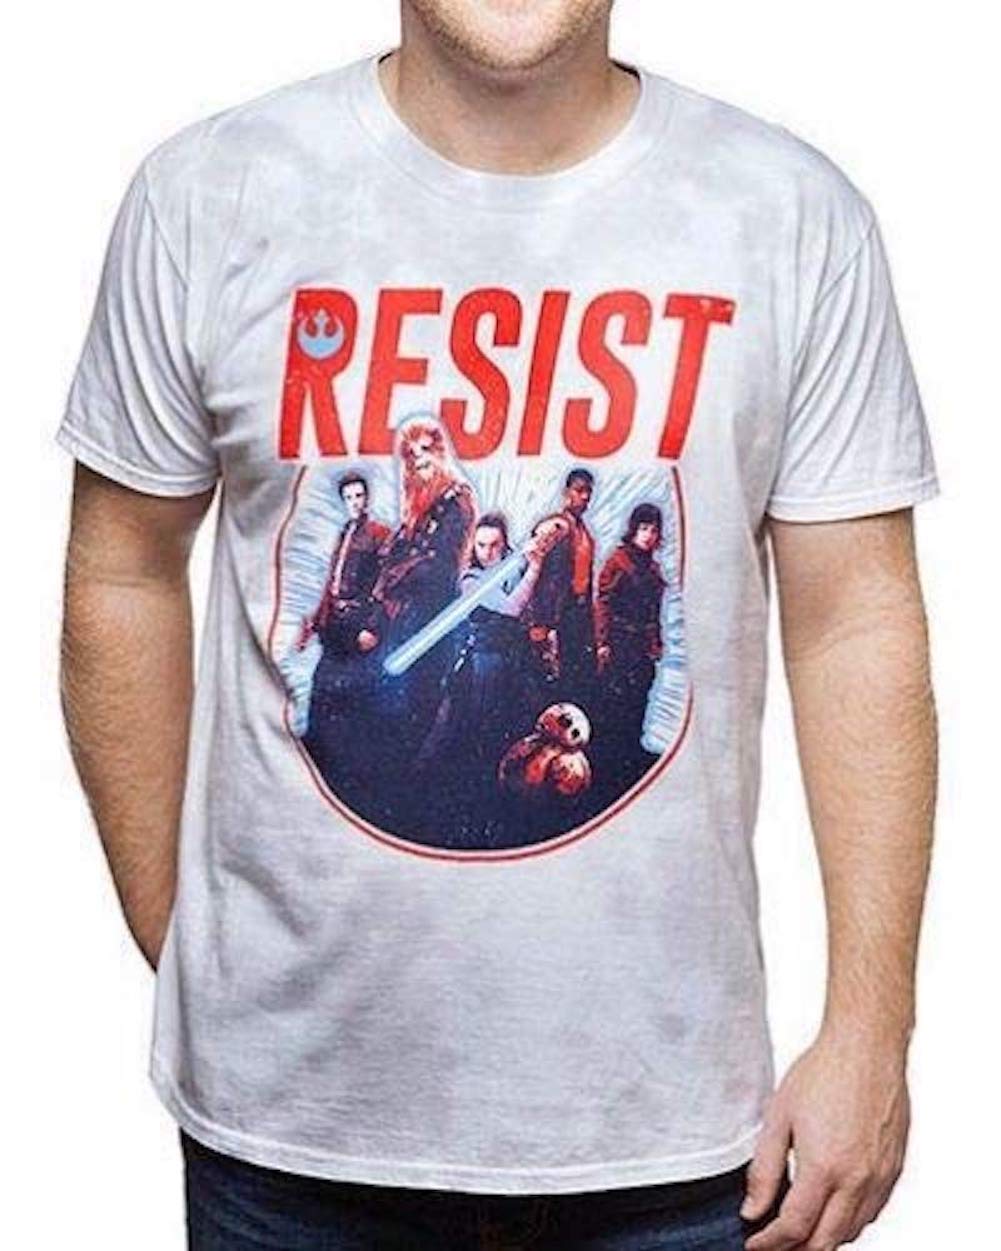 Star Wars Resist Short Sleeve Shirt - Large